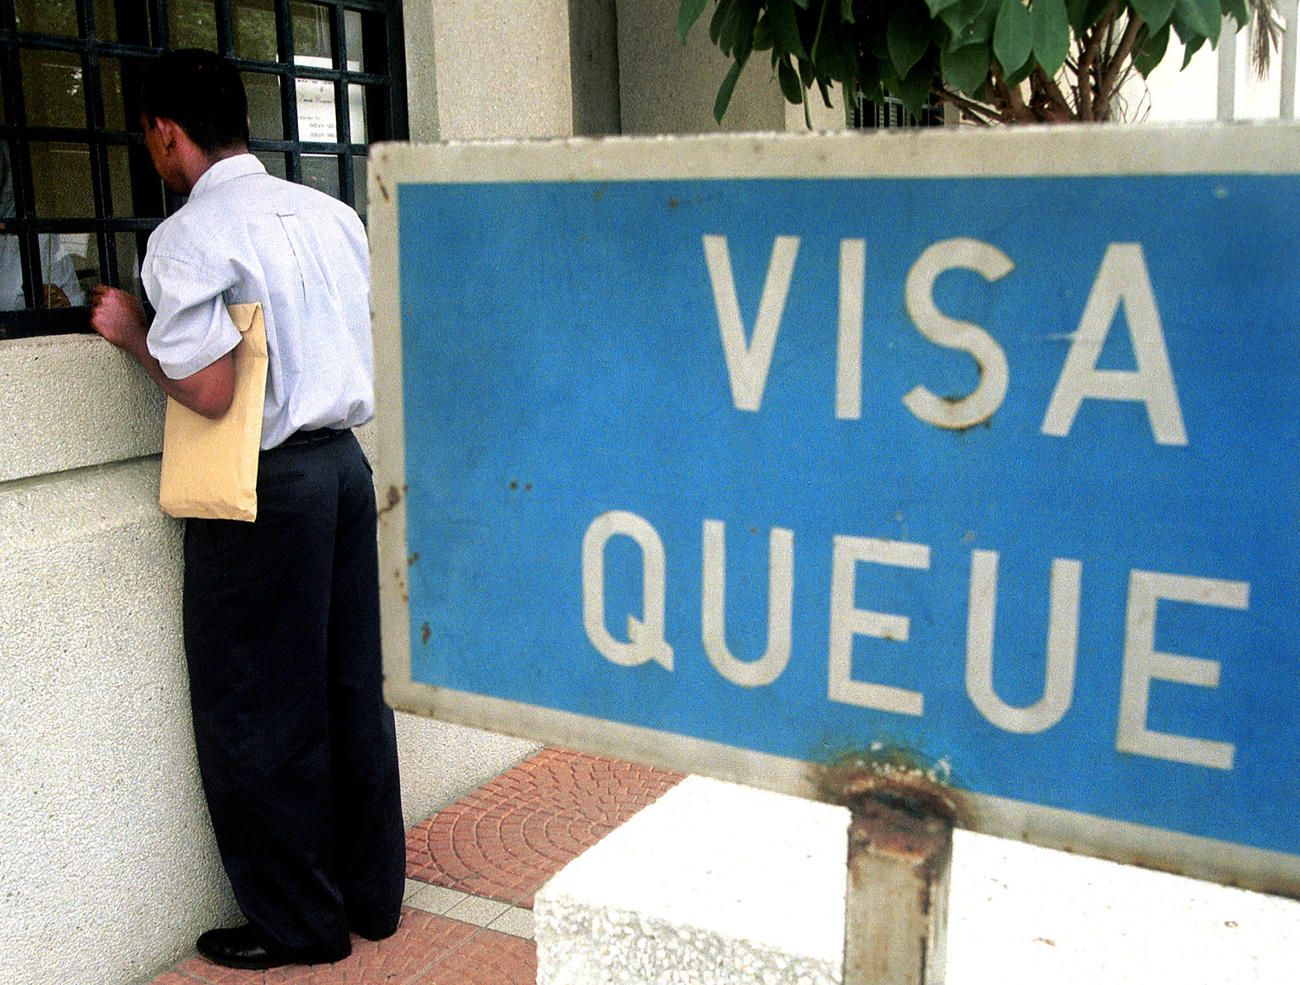 US visa queue